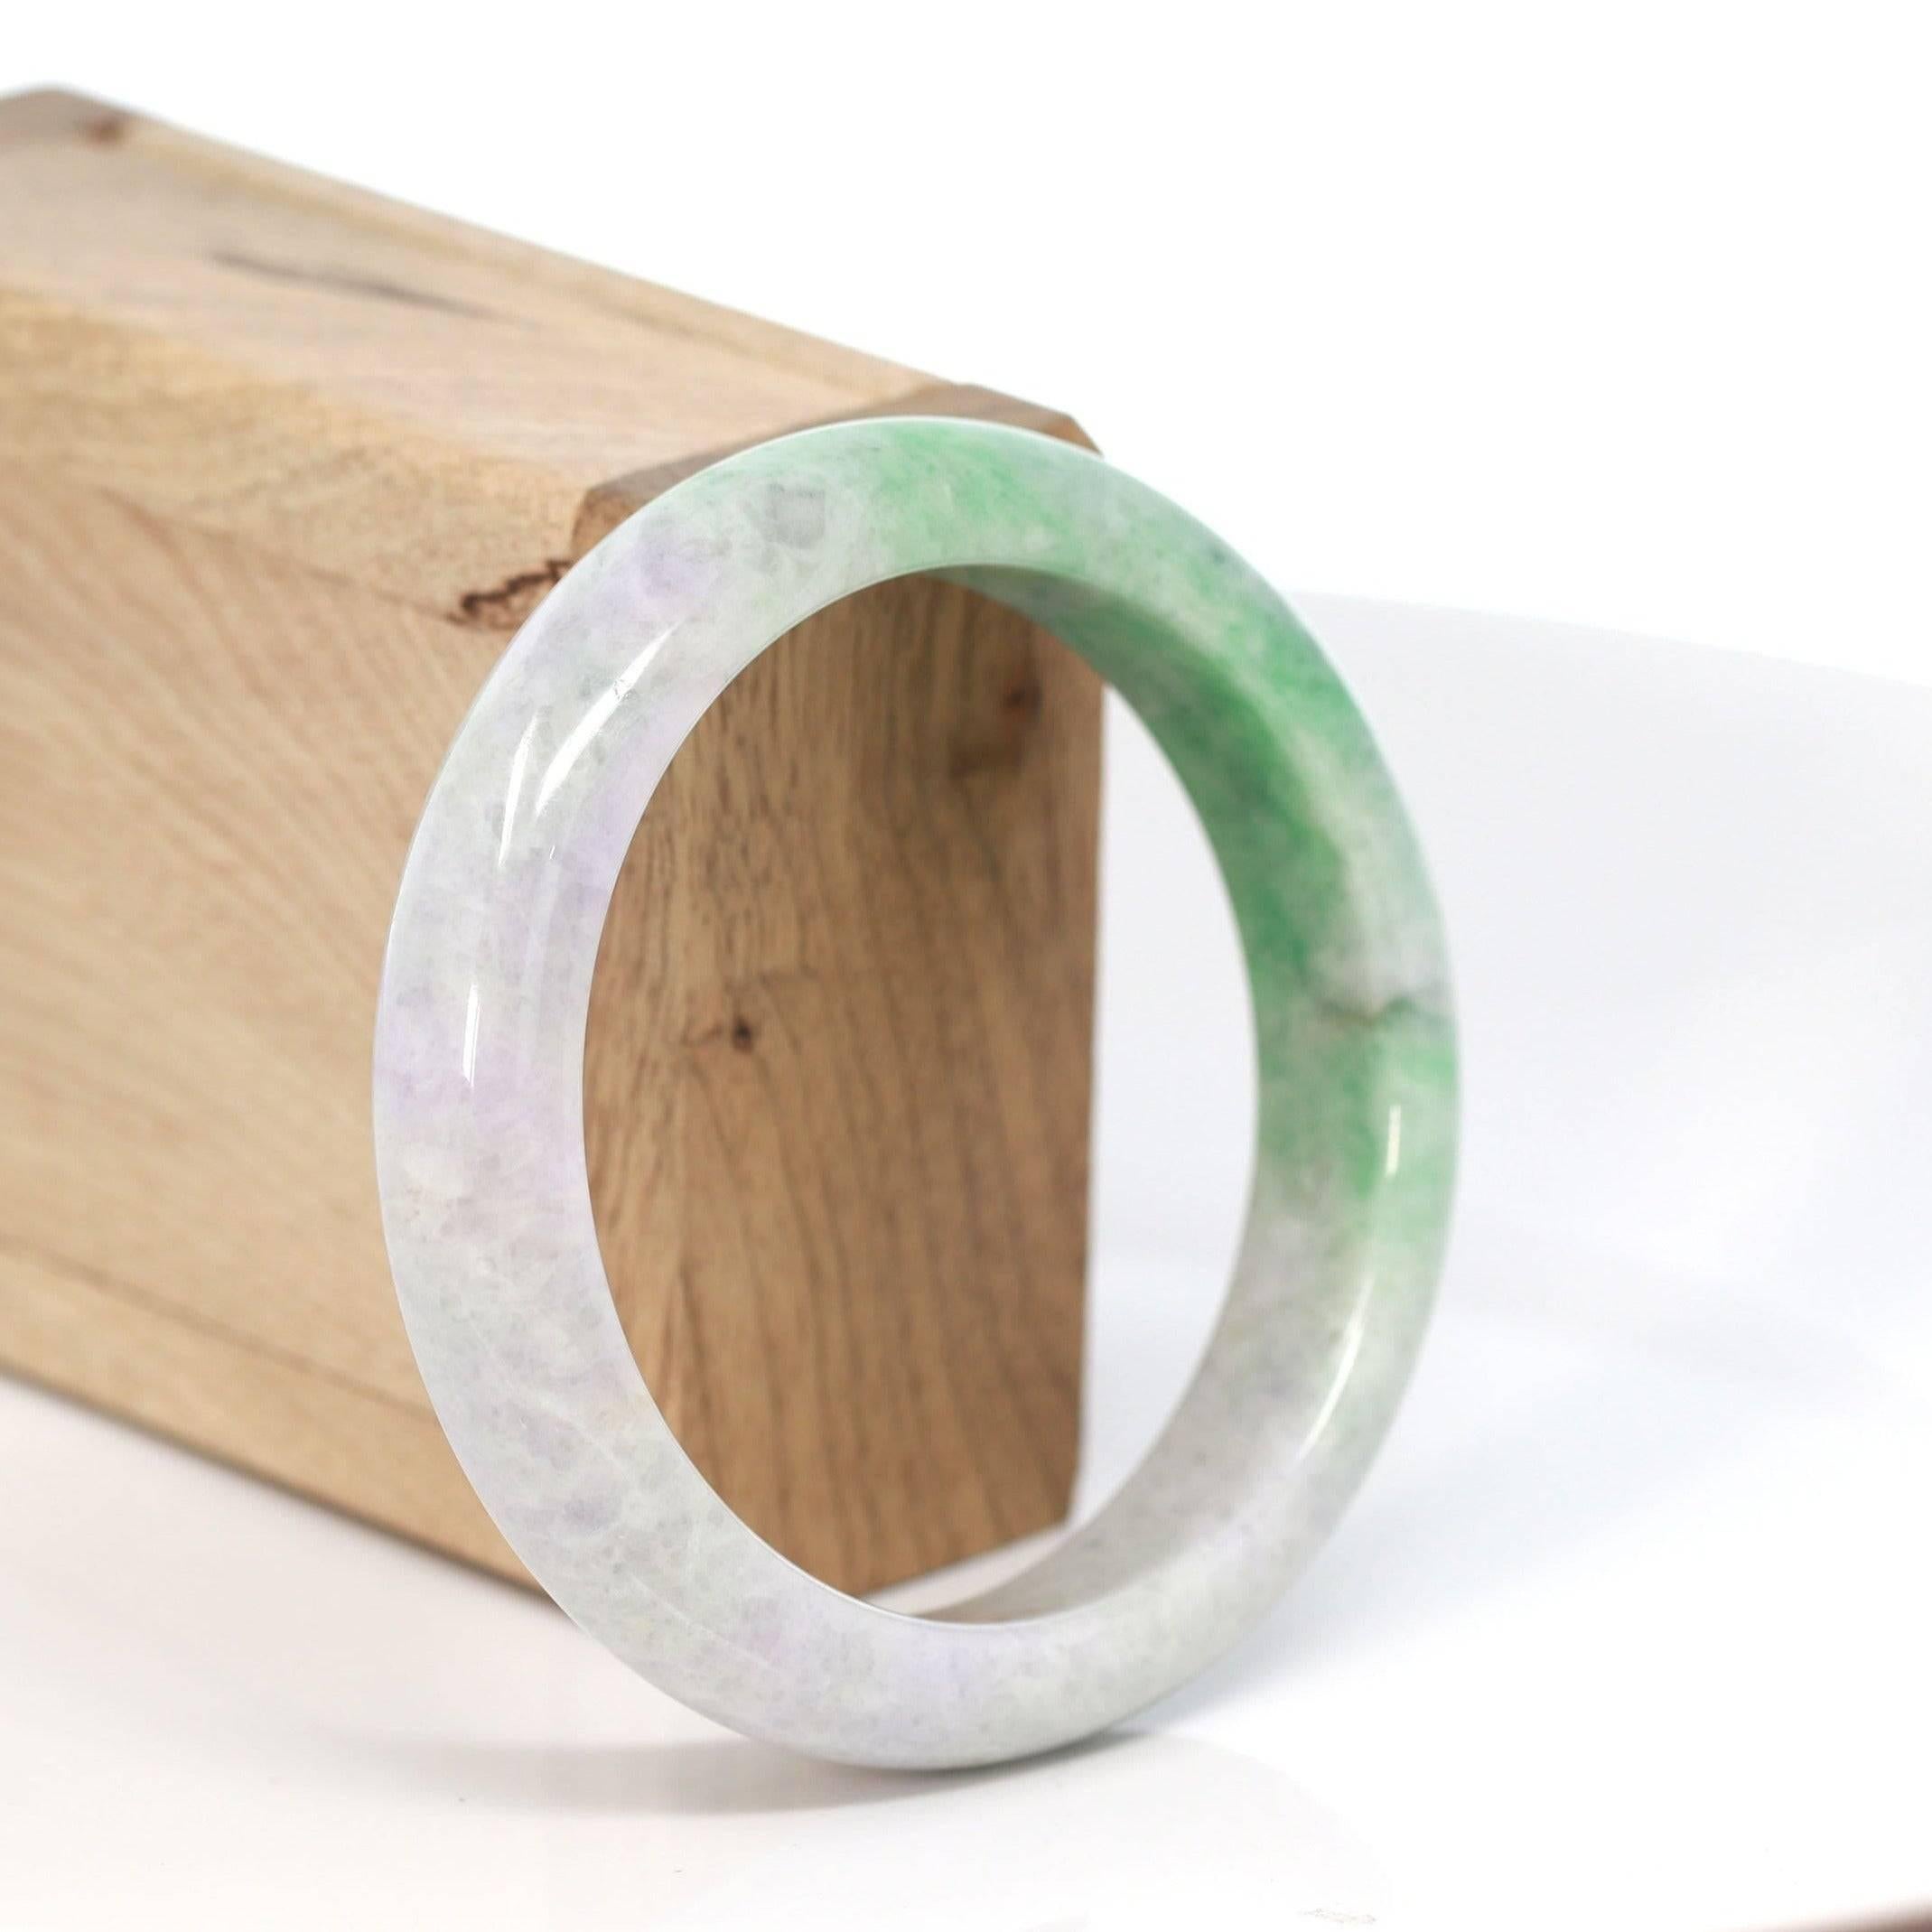 * DETAILS--- Natural Light Green Genuine Burmese Jadeite Jade Bangle Bracelet.  All 